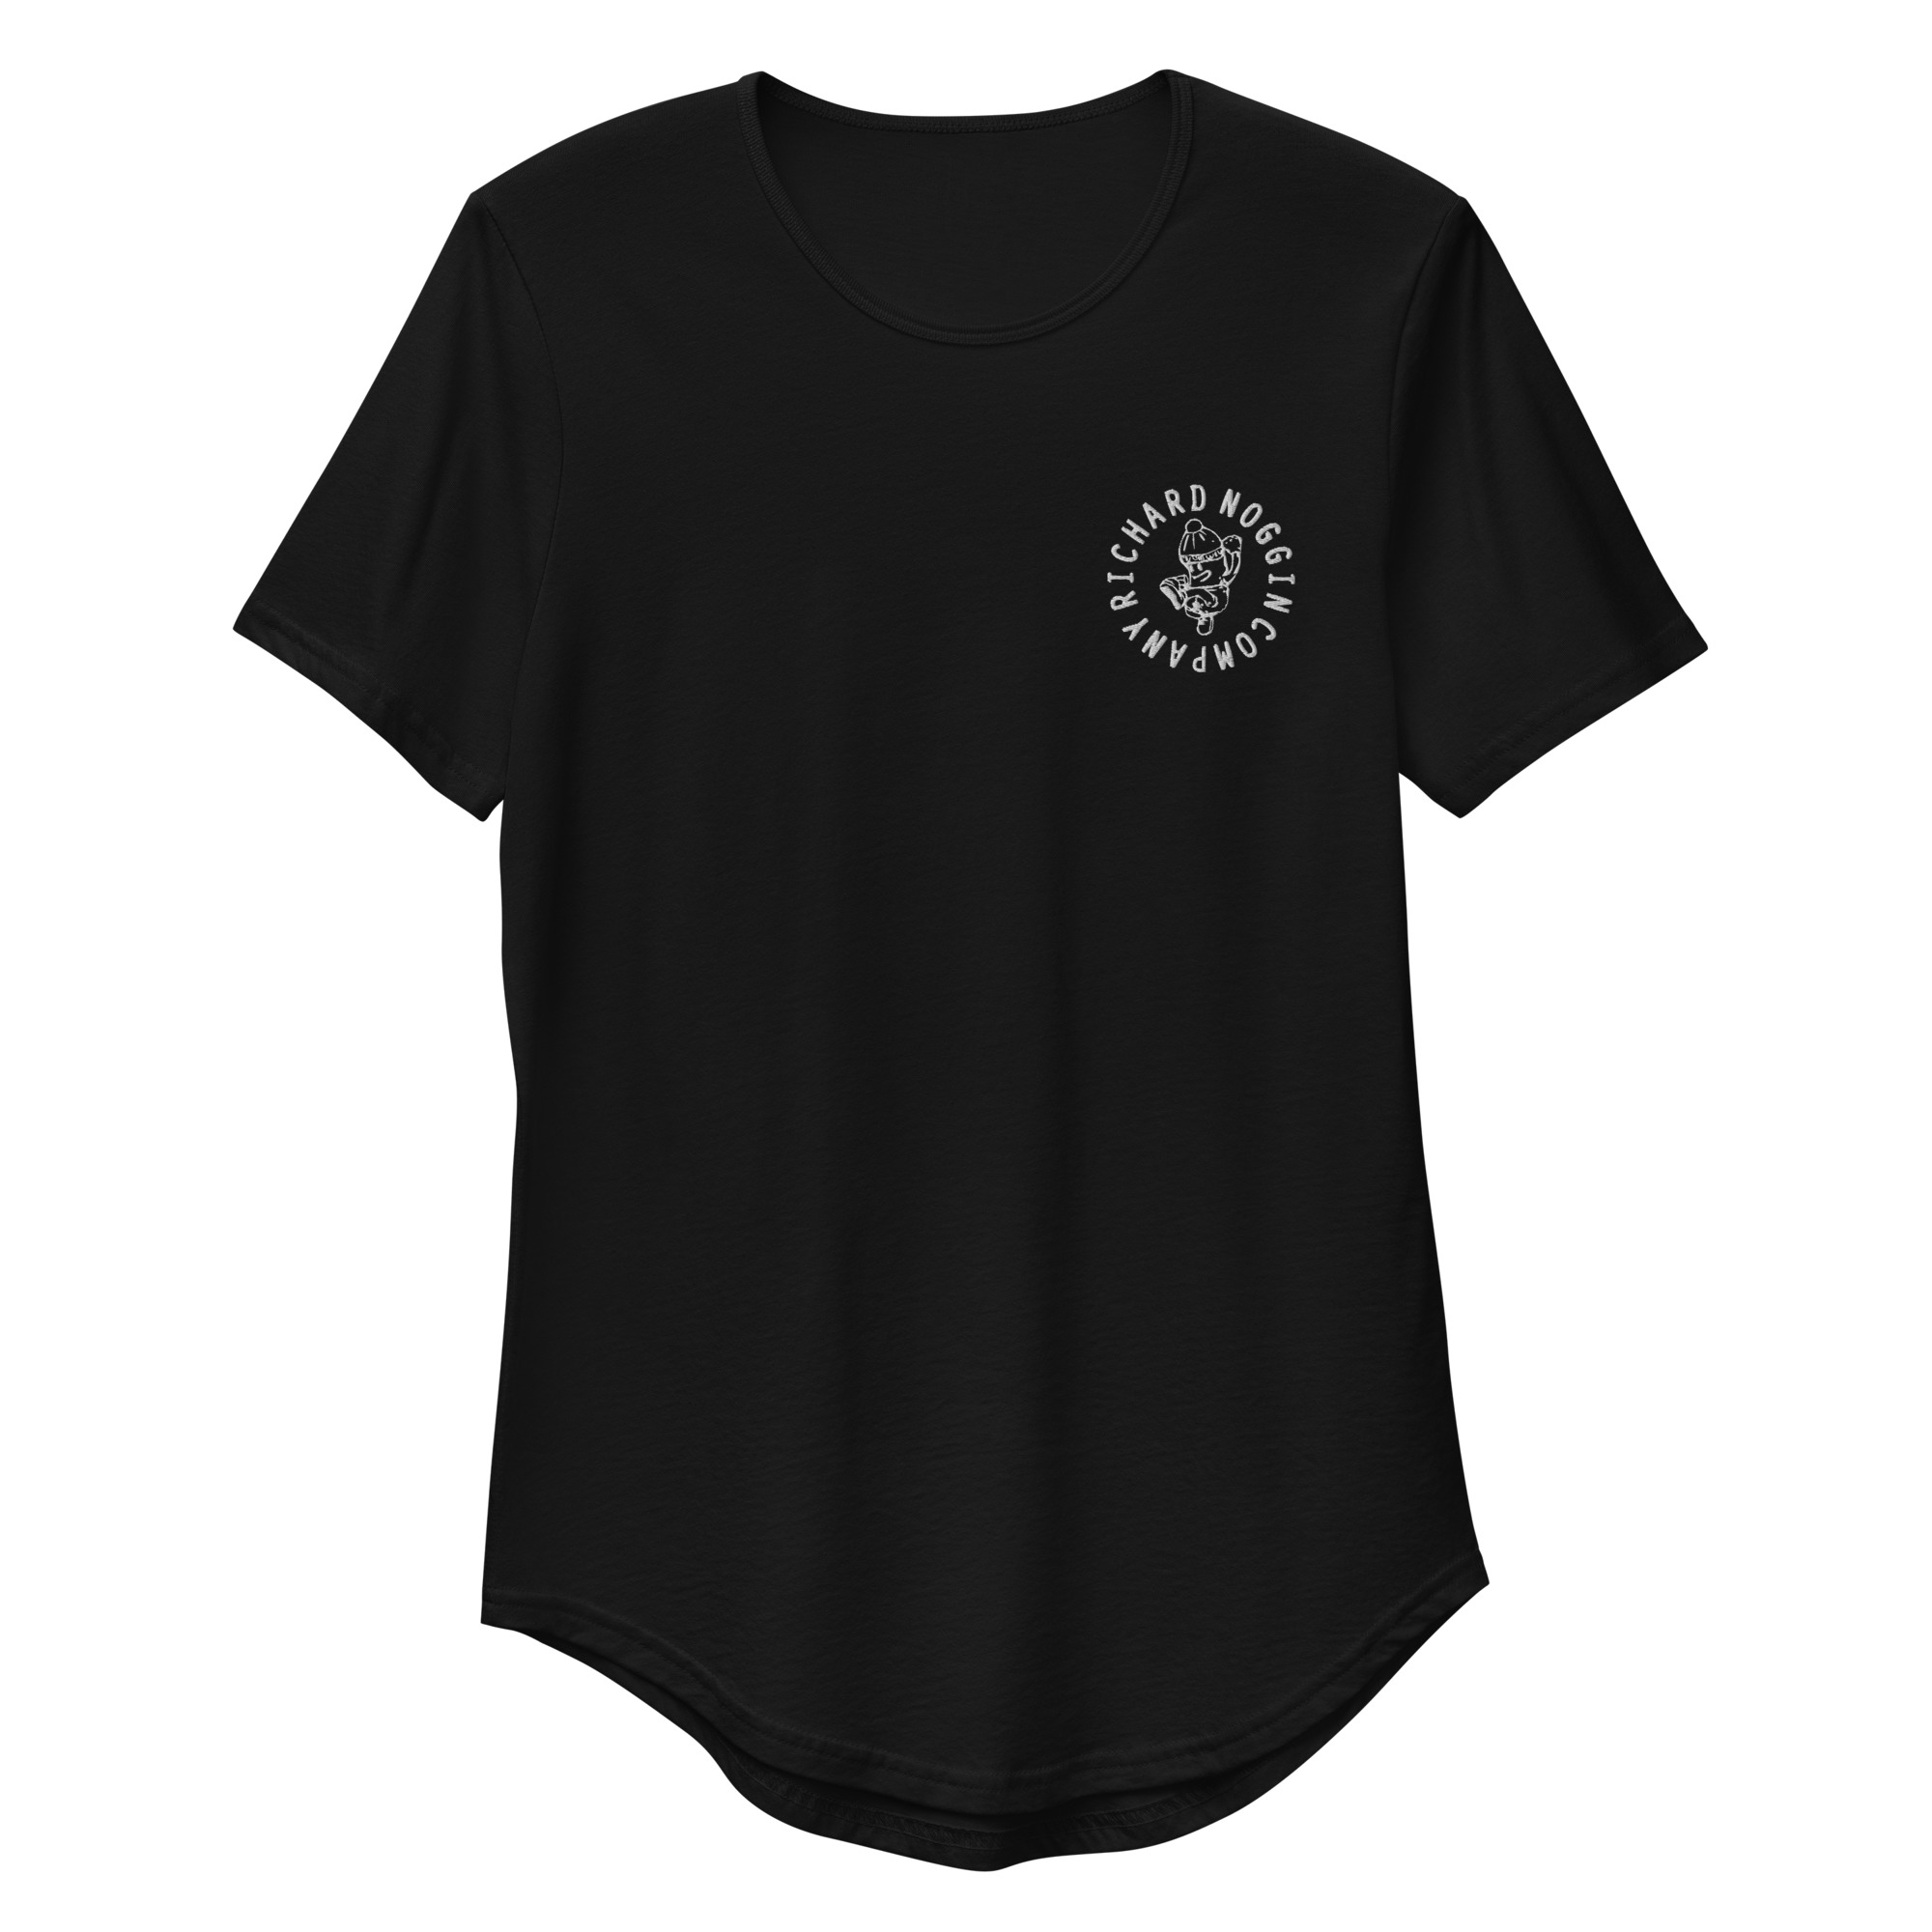 mens-curved-hem-t-shirt-black-front-63c18970a3455.jpg